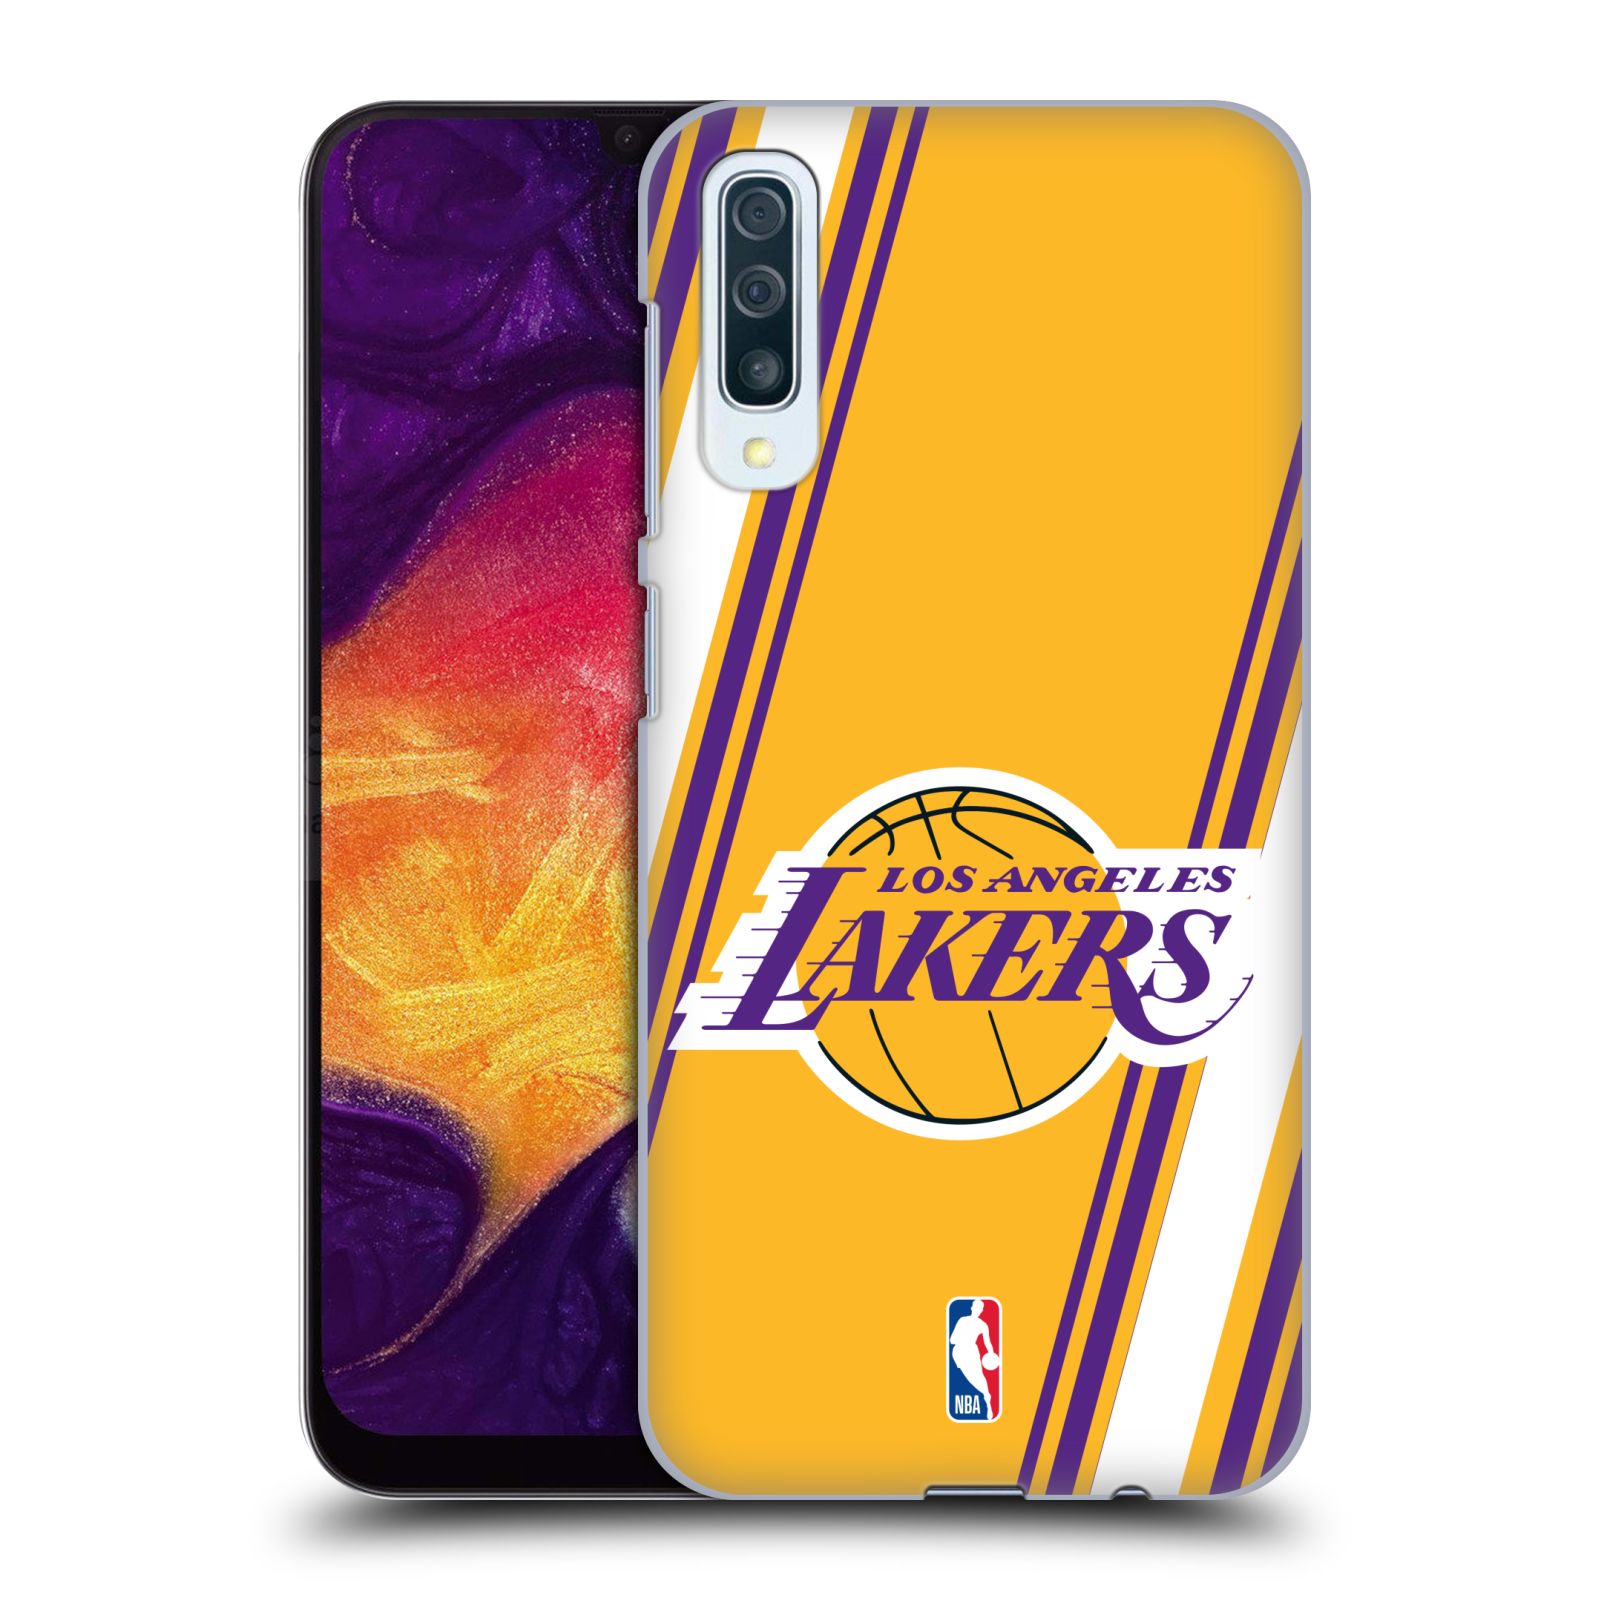 POUZDRO A OBAL NA MOBIL - Pouzdro na mobil Samsung Galaxy A50 - HEAD CASE - NBA Basketbalový klub Los Angeles Lakers žlutá barva pruhy - Pouzdra, obaly, kryty a tvrzená skla na mobilní telefony